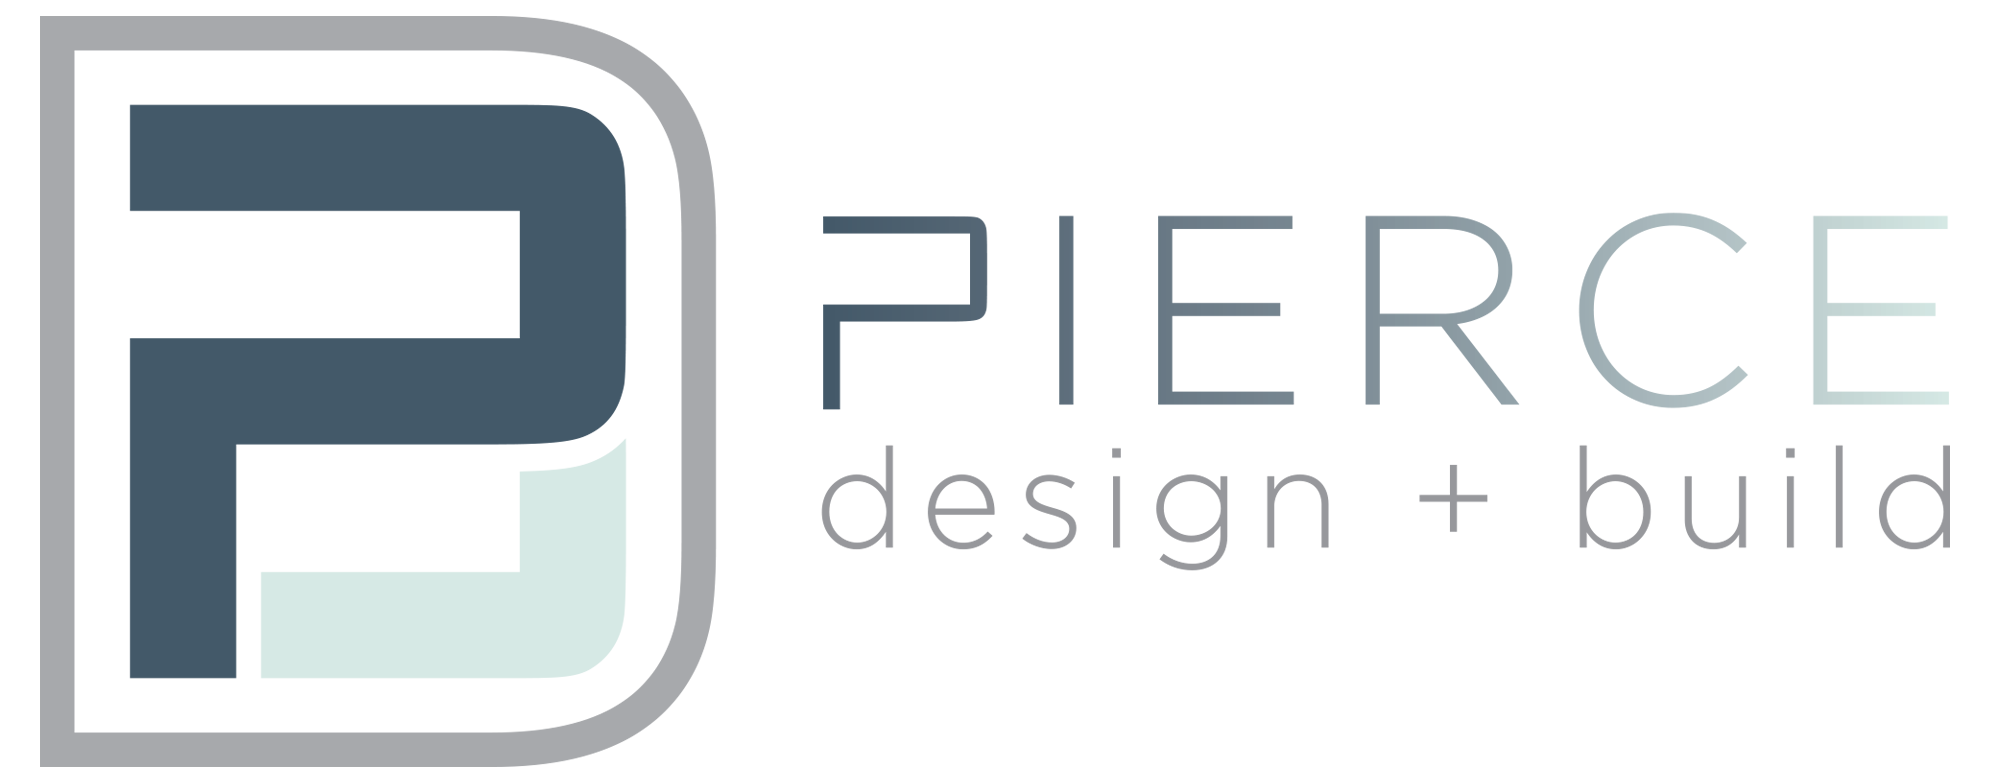 Pierce Design Build Final Logo Horizontal (2)